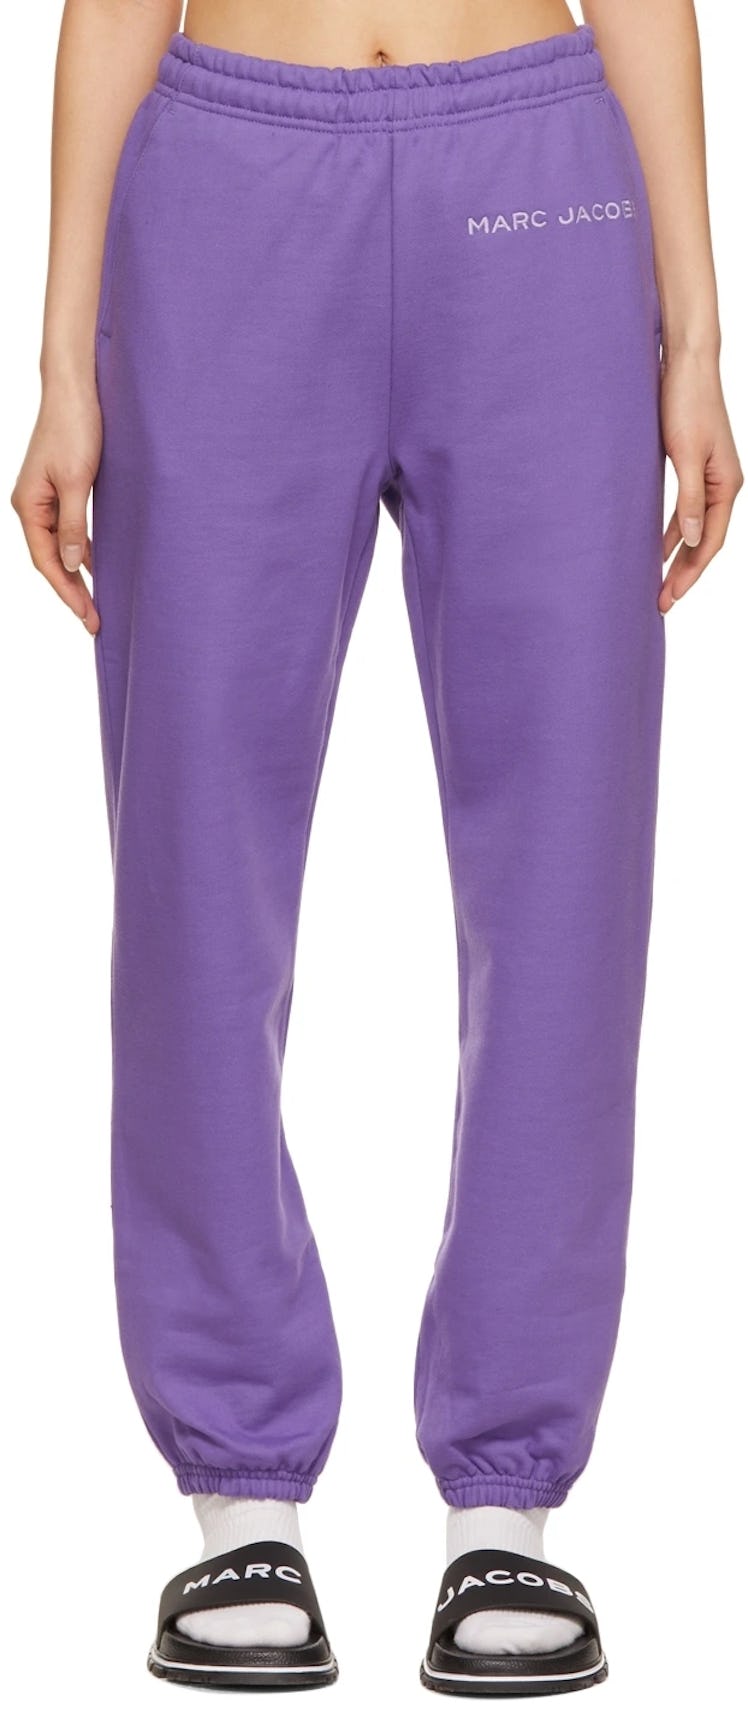 Marc Jacobs' Purple 'The Sweatpants' Lounge Pants.